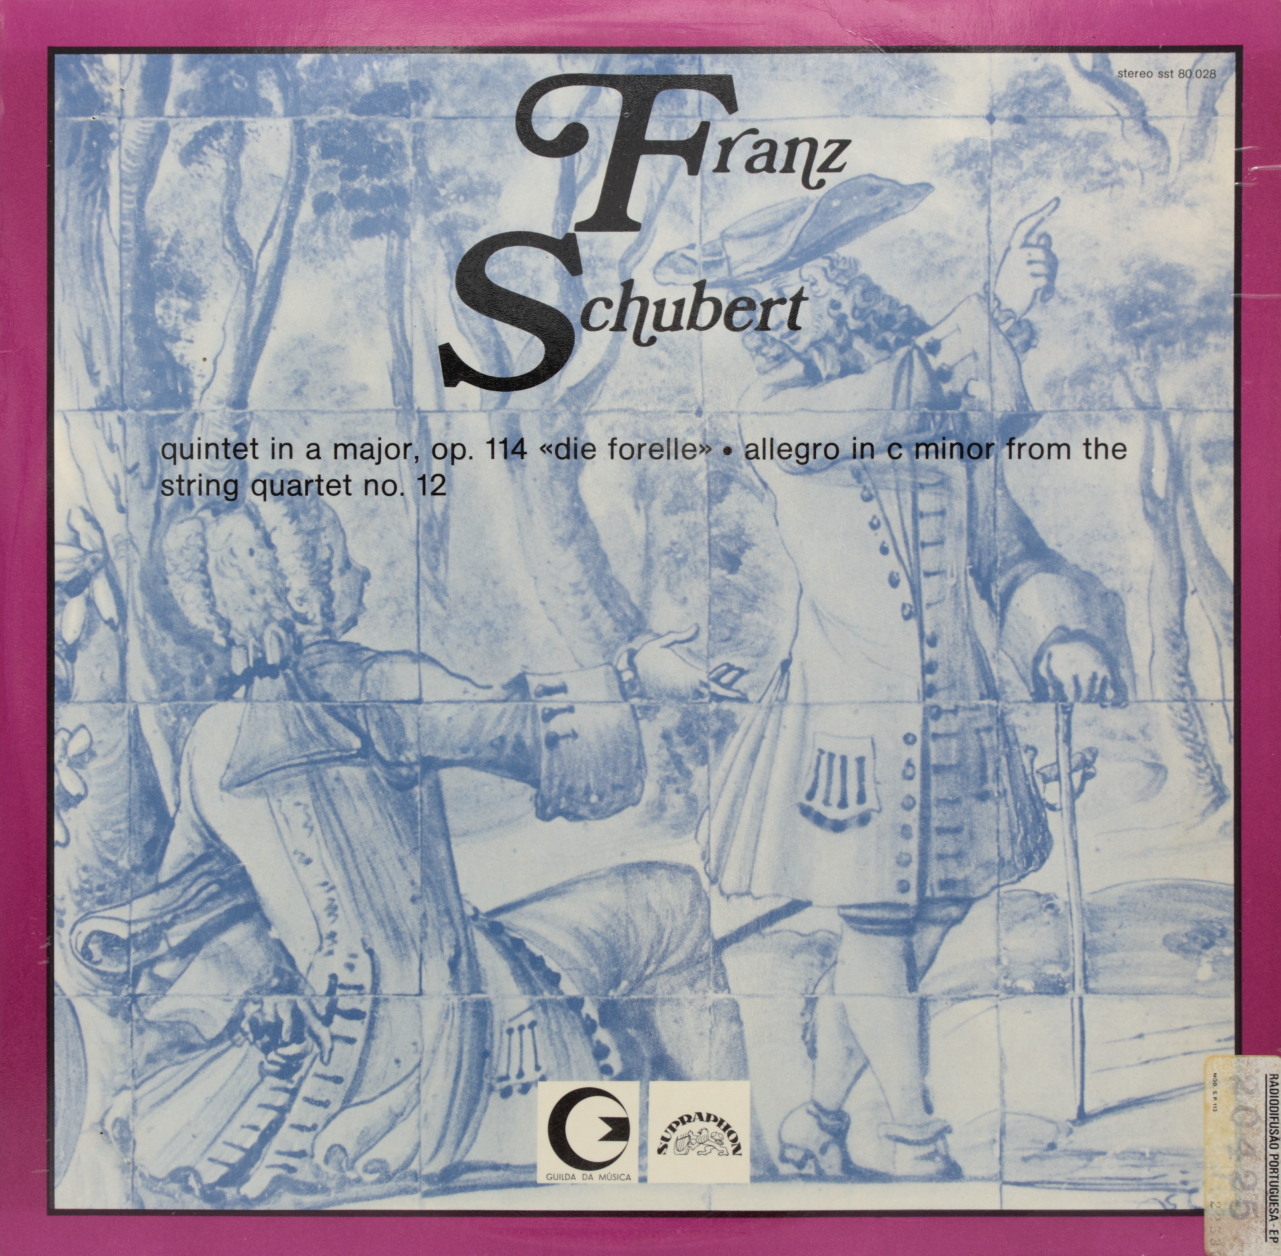 Schubert: Quintet in A major, op. 114 Die forelle; Allegro in C minor from the String quartet no